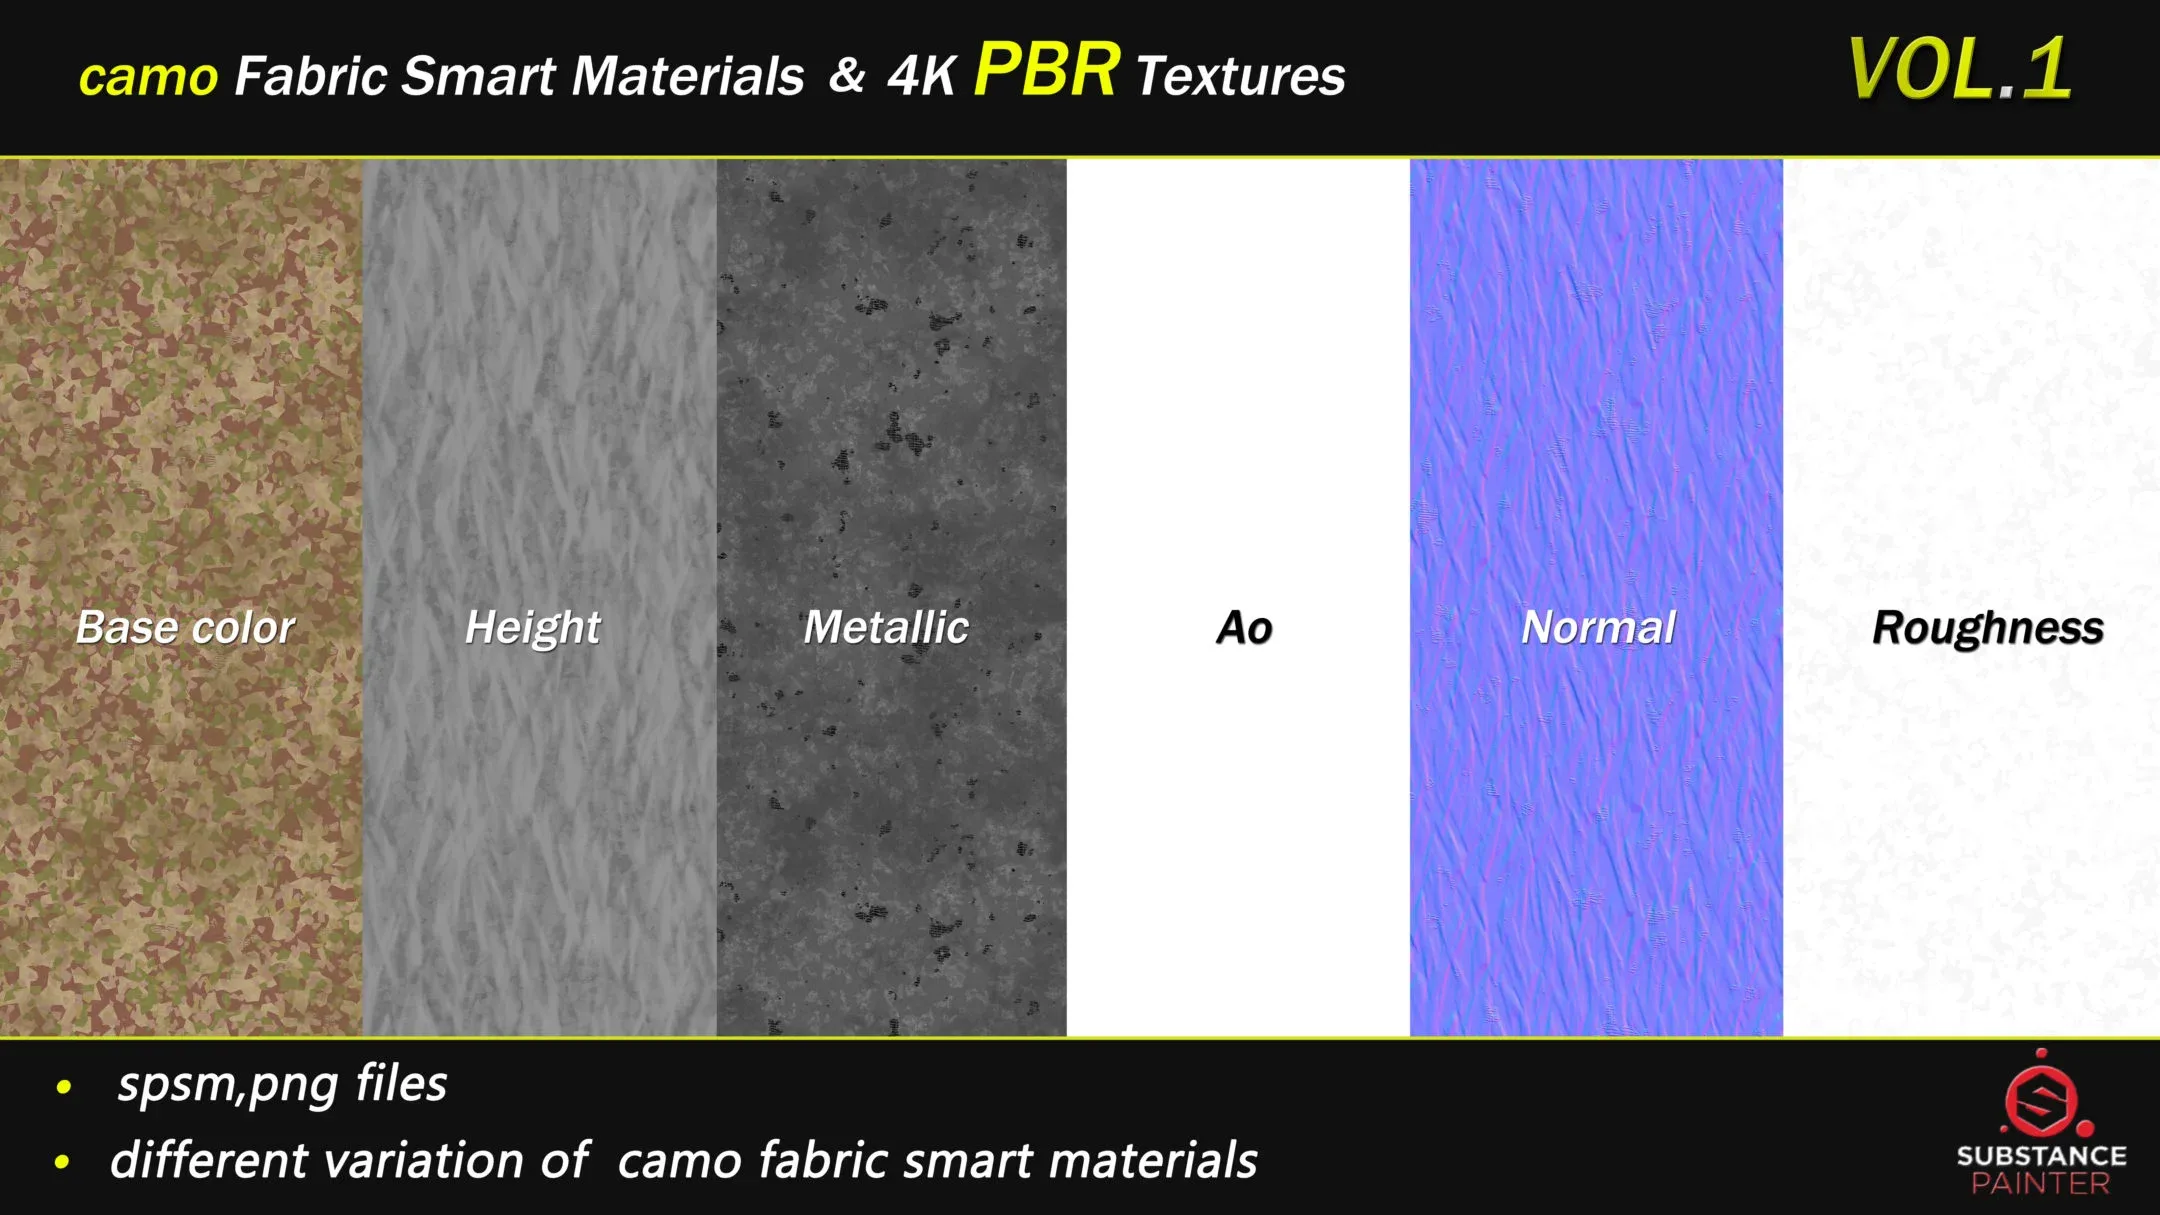 50 Camo Fabric Smart Material Bundle + 4K PBR Texture